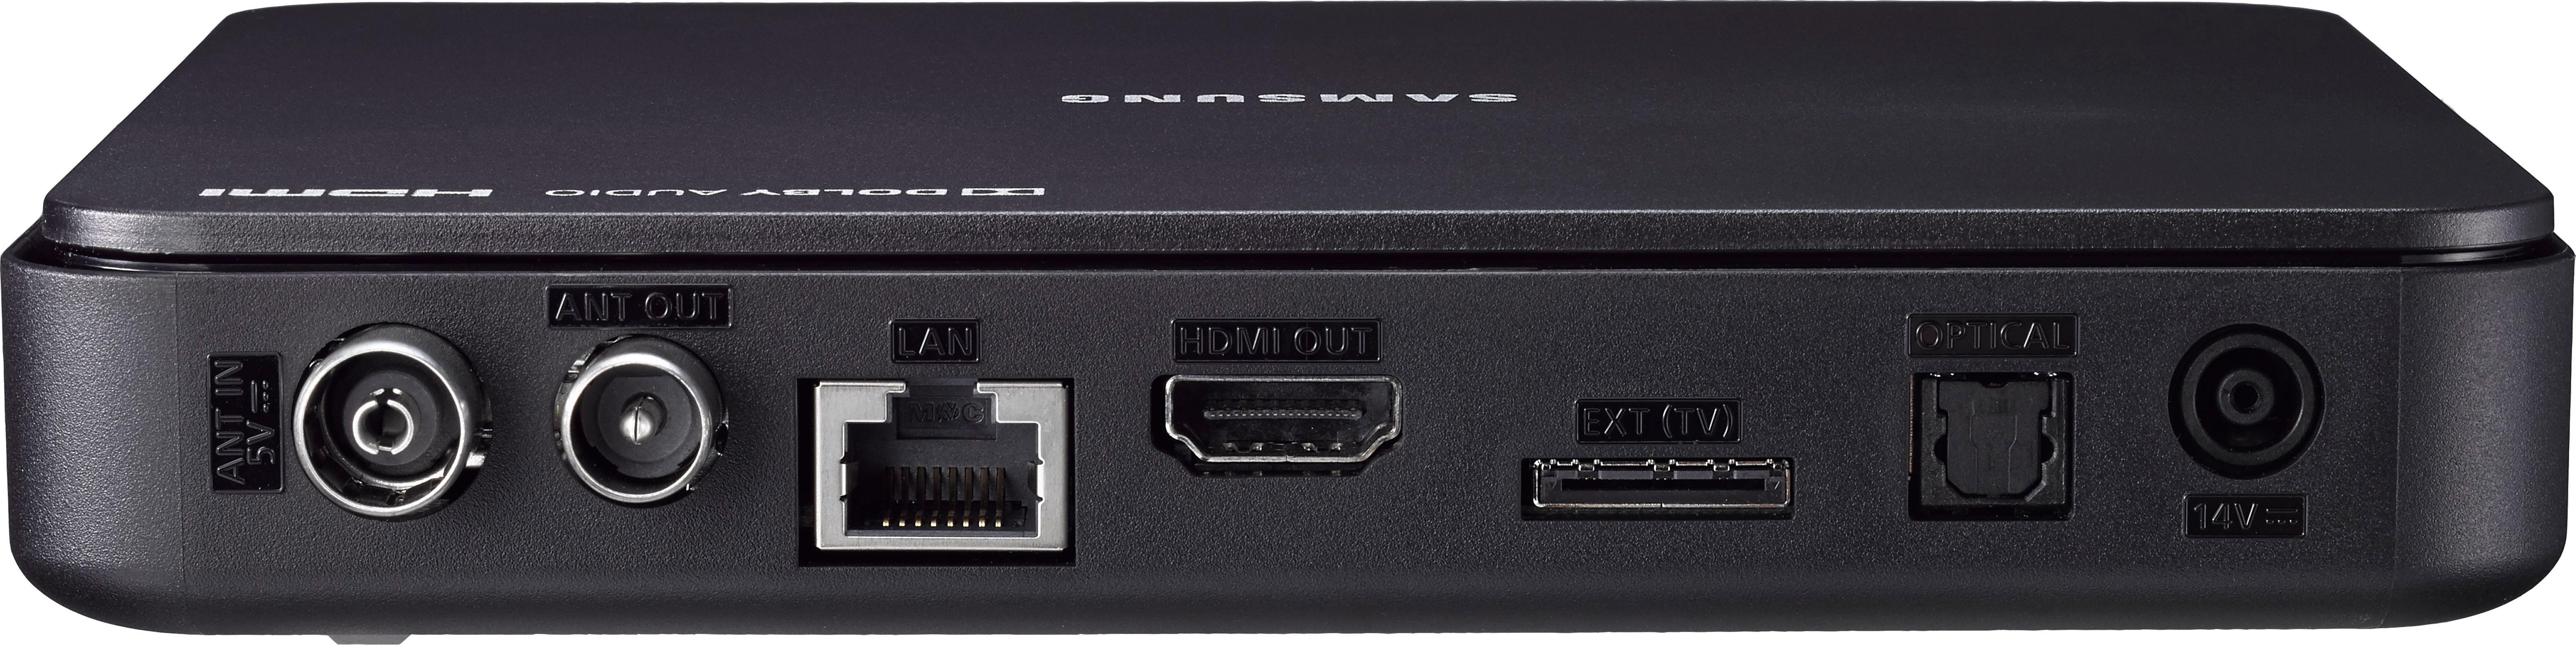 SAMSUNG GX-MB Schwarz) DVB-T2 540 TL/ZG (DVB-T, (H.265), Receiver